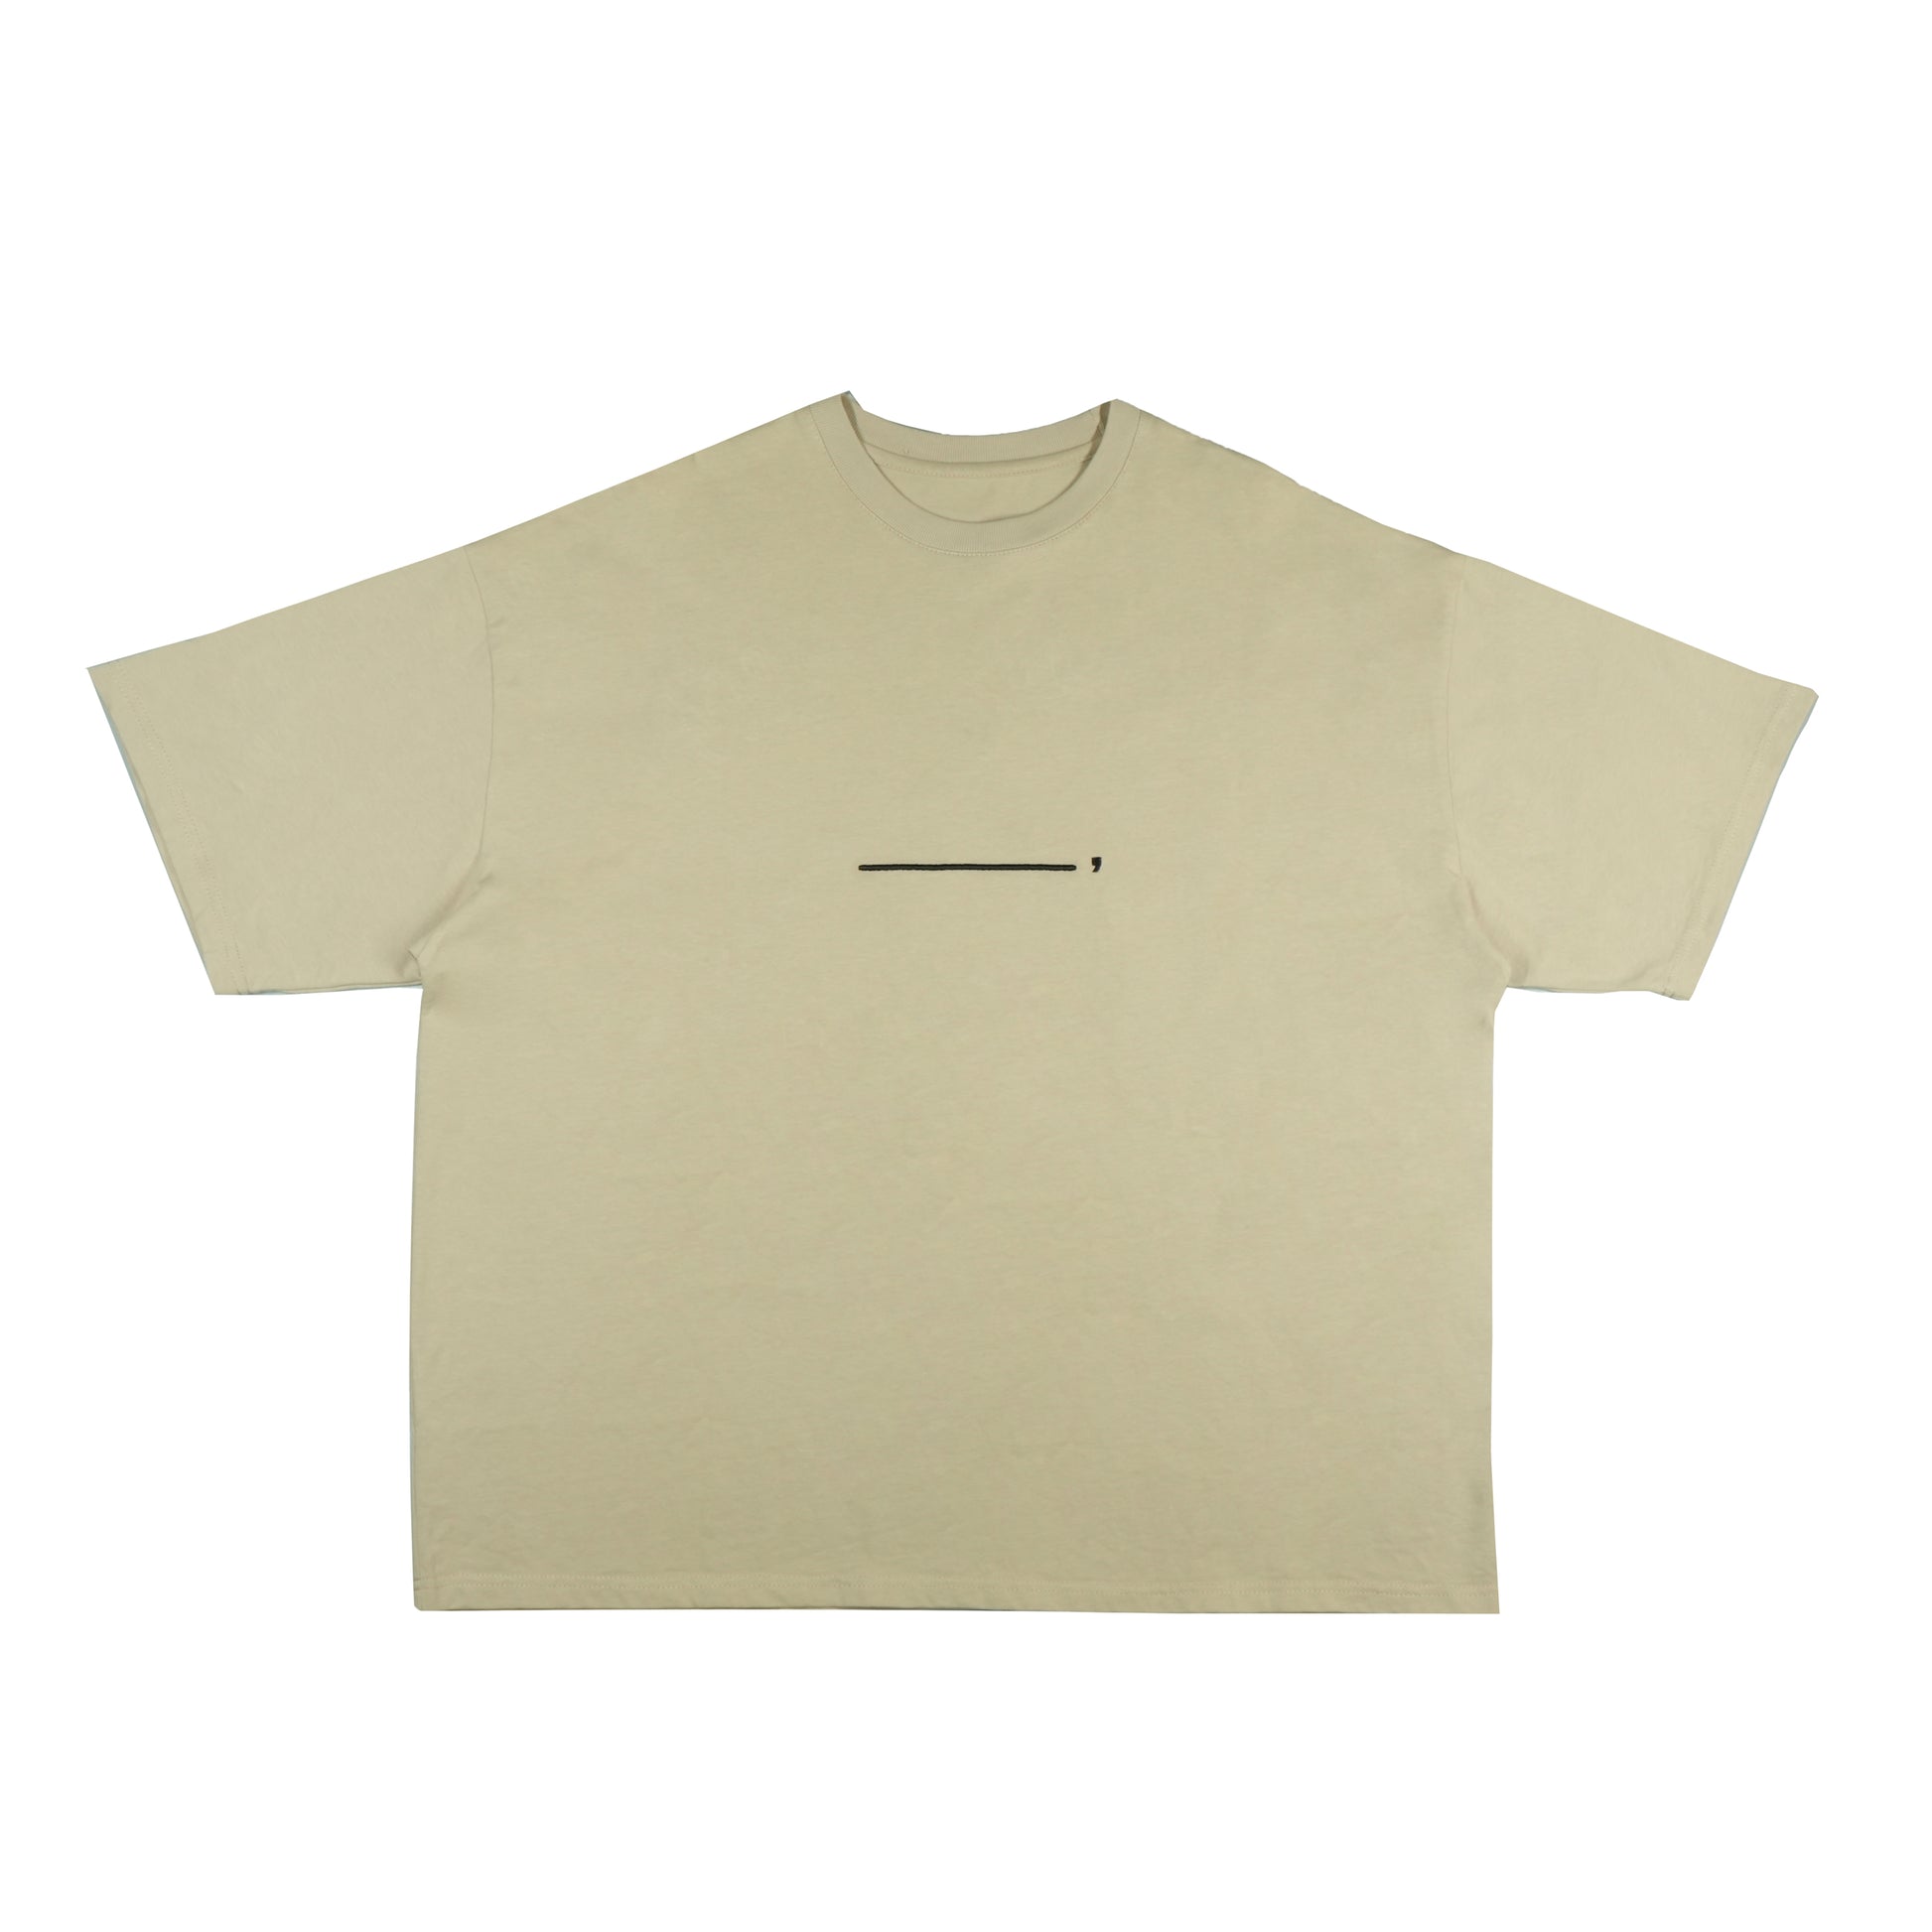 Toson, "Mountain" Patchwork T-shirt